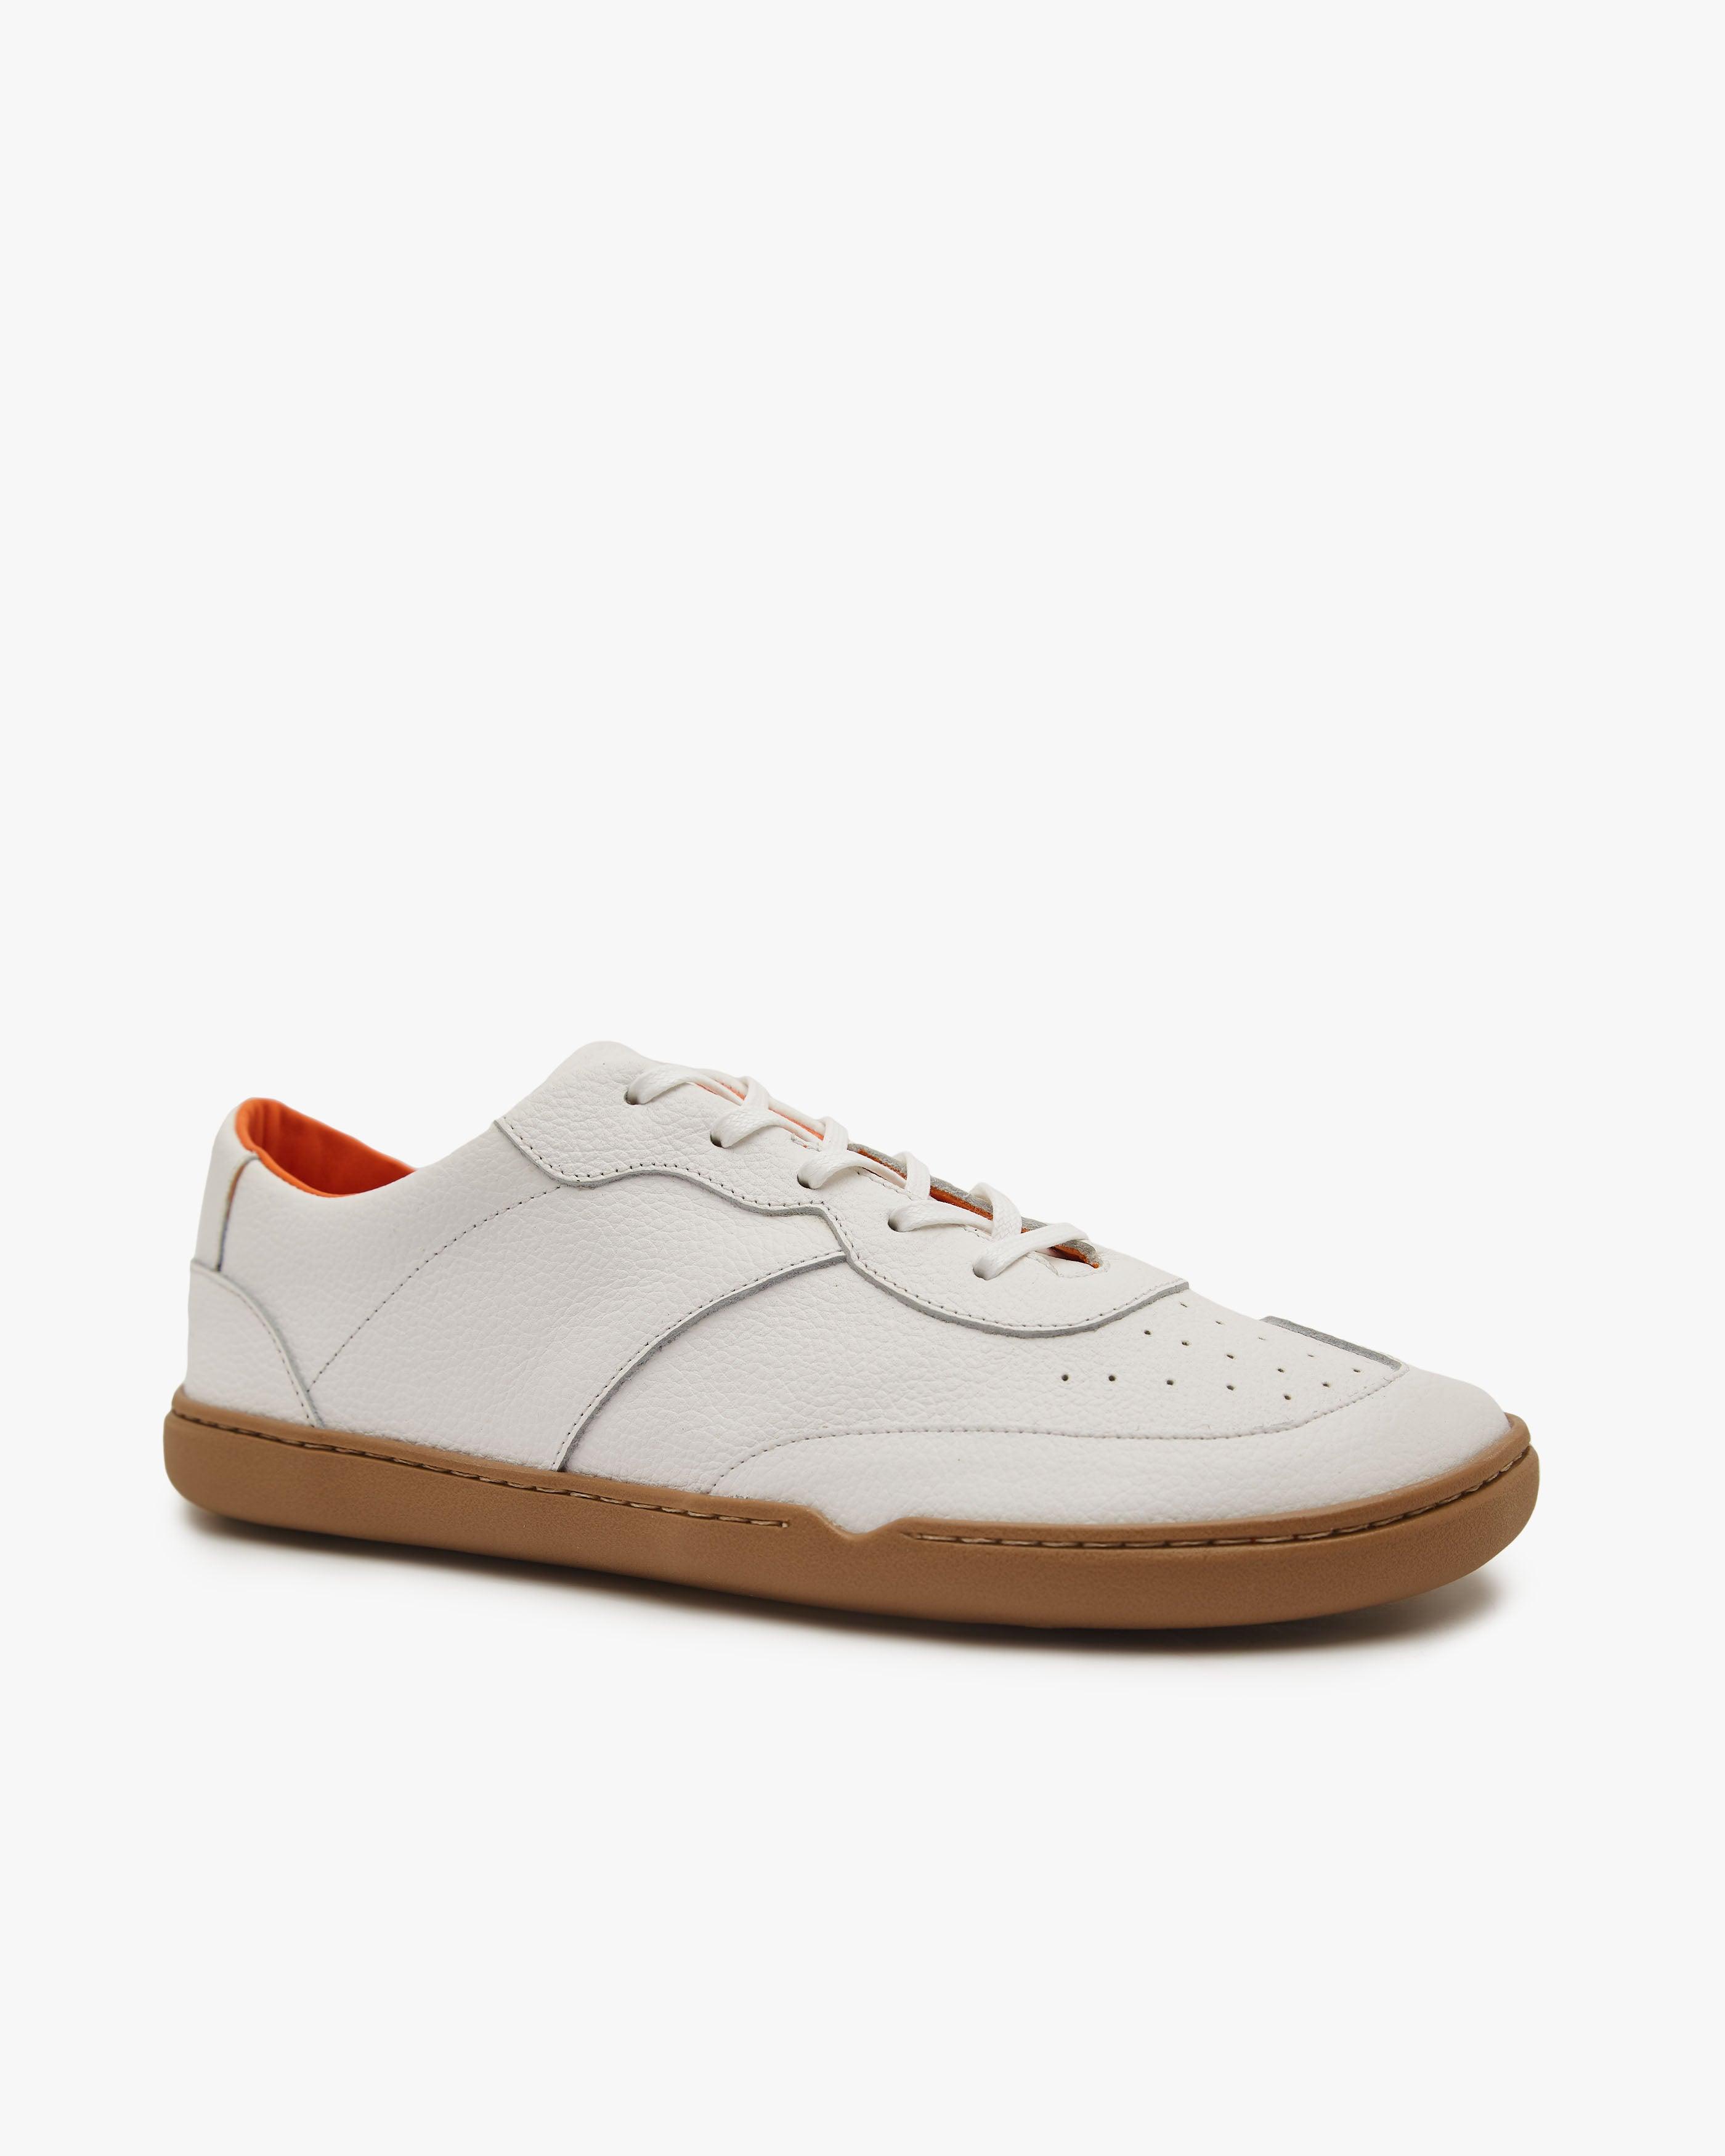 fusie berekenen compromis Barefoot Shoes - Men - Natural Leather - White - The Retro Sneakers – Origo  Shoes